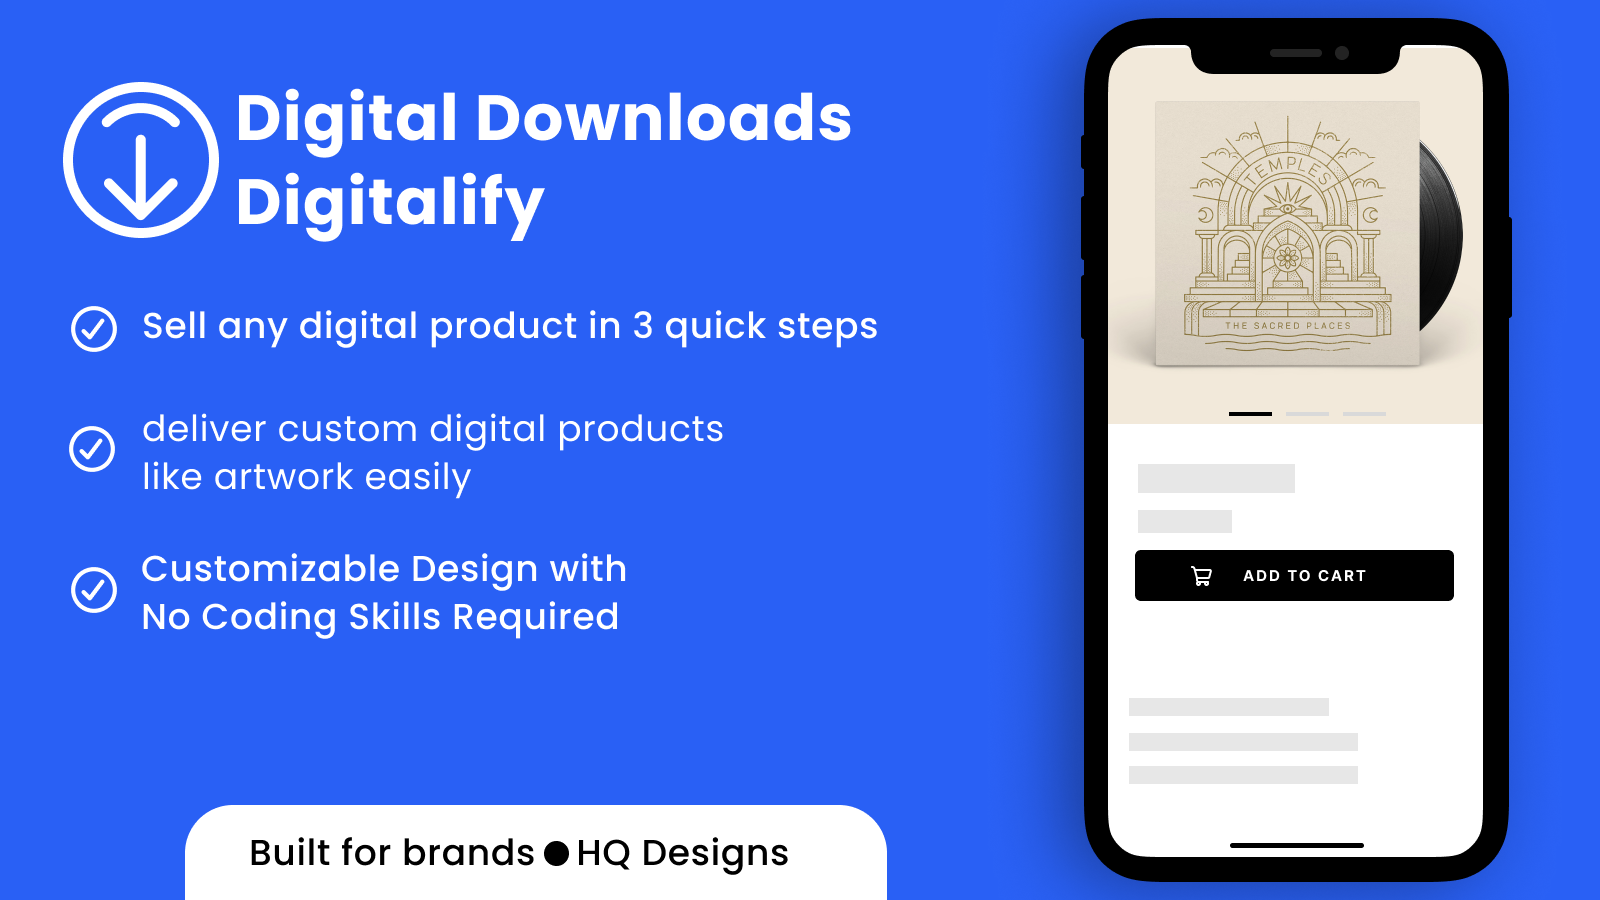 Digital Downloads - Digitalify